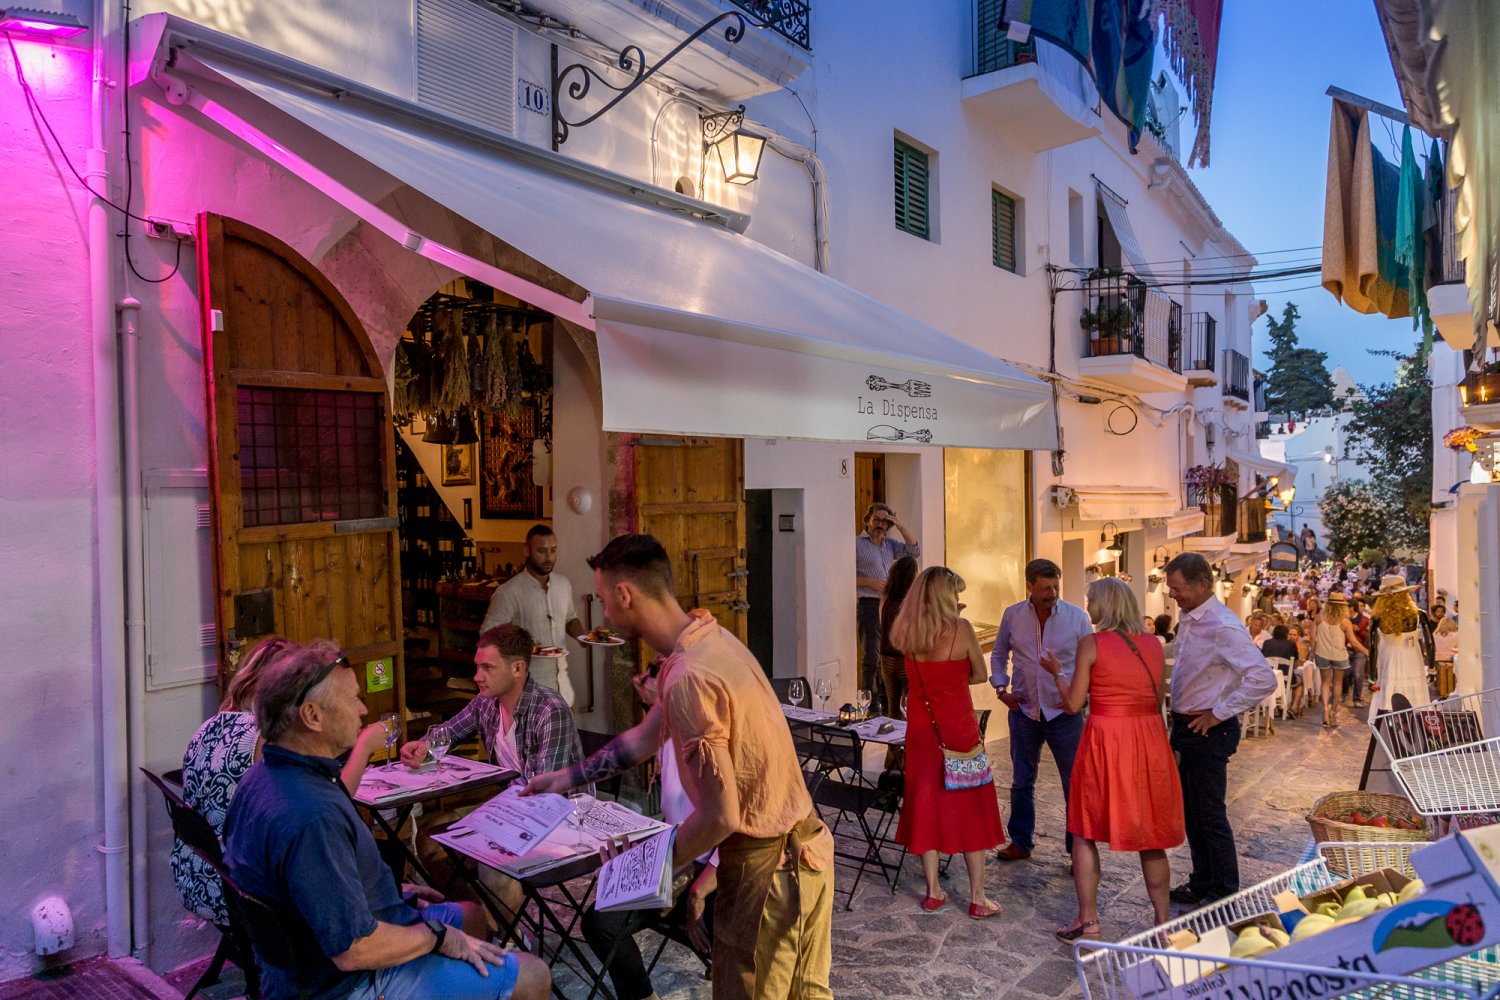 La Dispensa, romantic fine dining in an iconic Ibizan setting